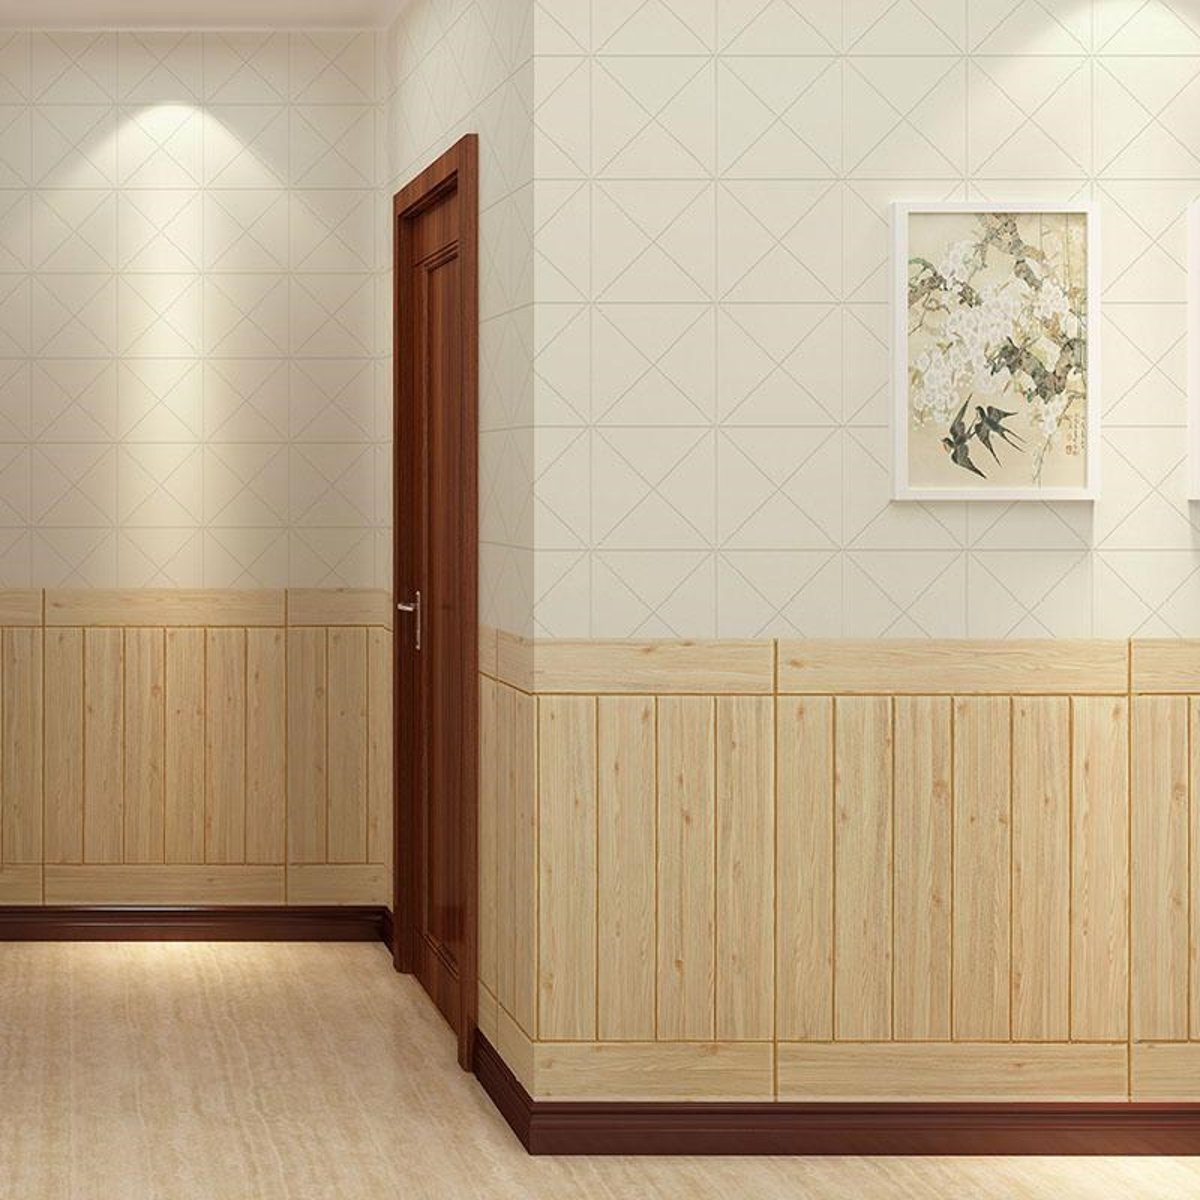 10pcs-70x70cm-3D-Wall-Tile-Stickers-Bedroom-Living-Room-Self-Adhesive-Decals-Foam-1700923-8